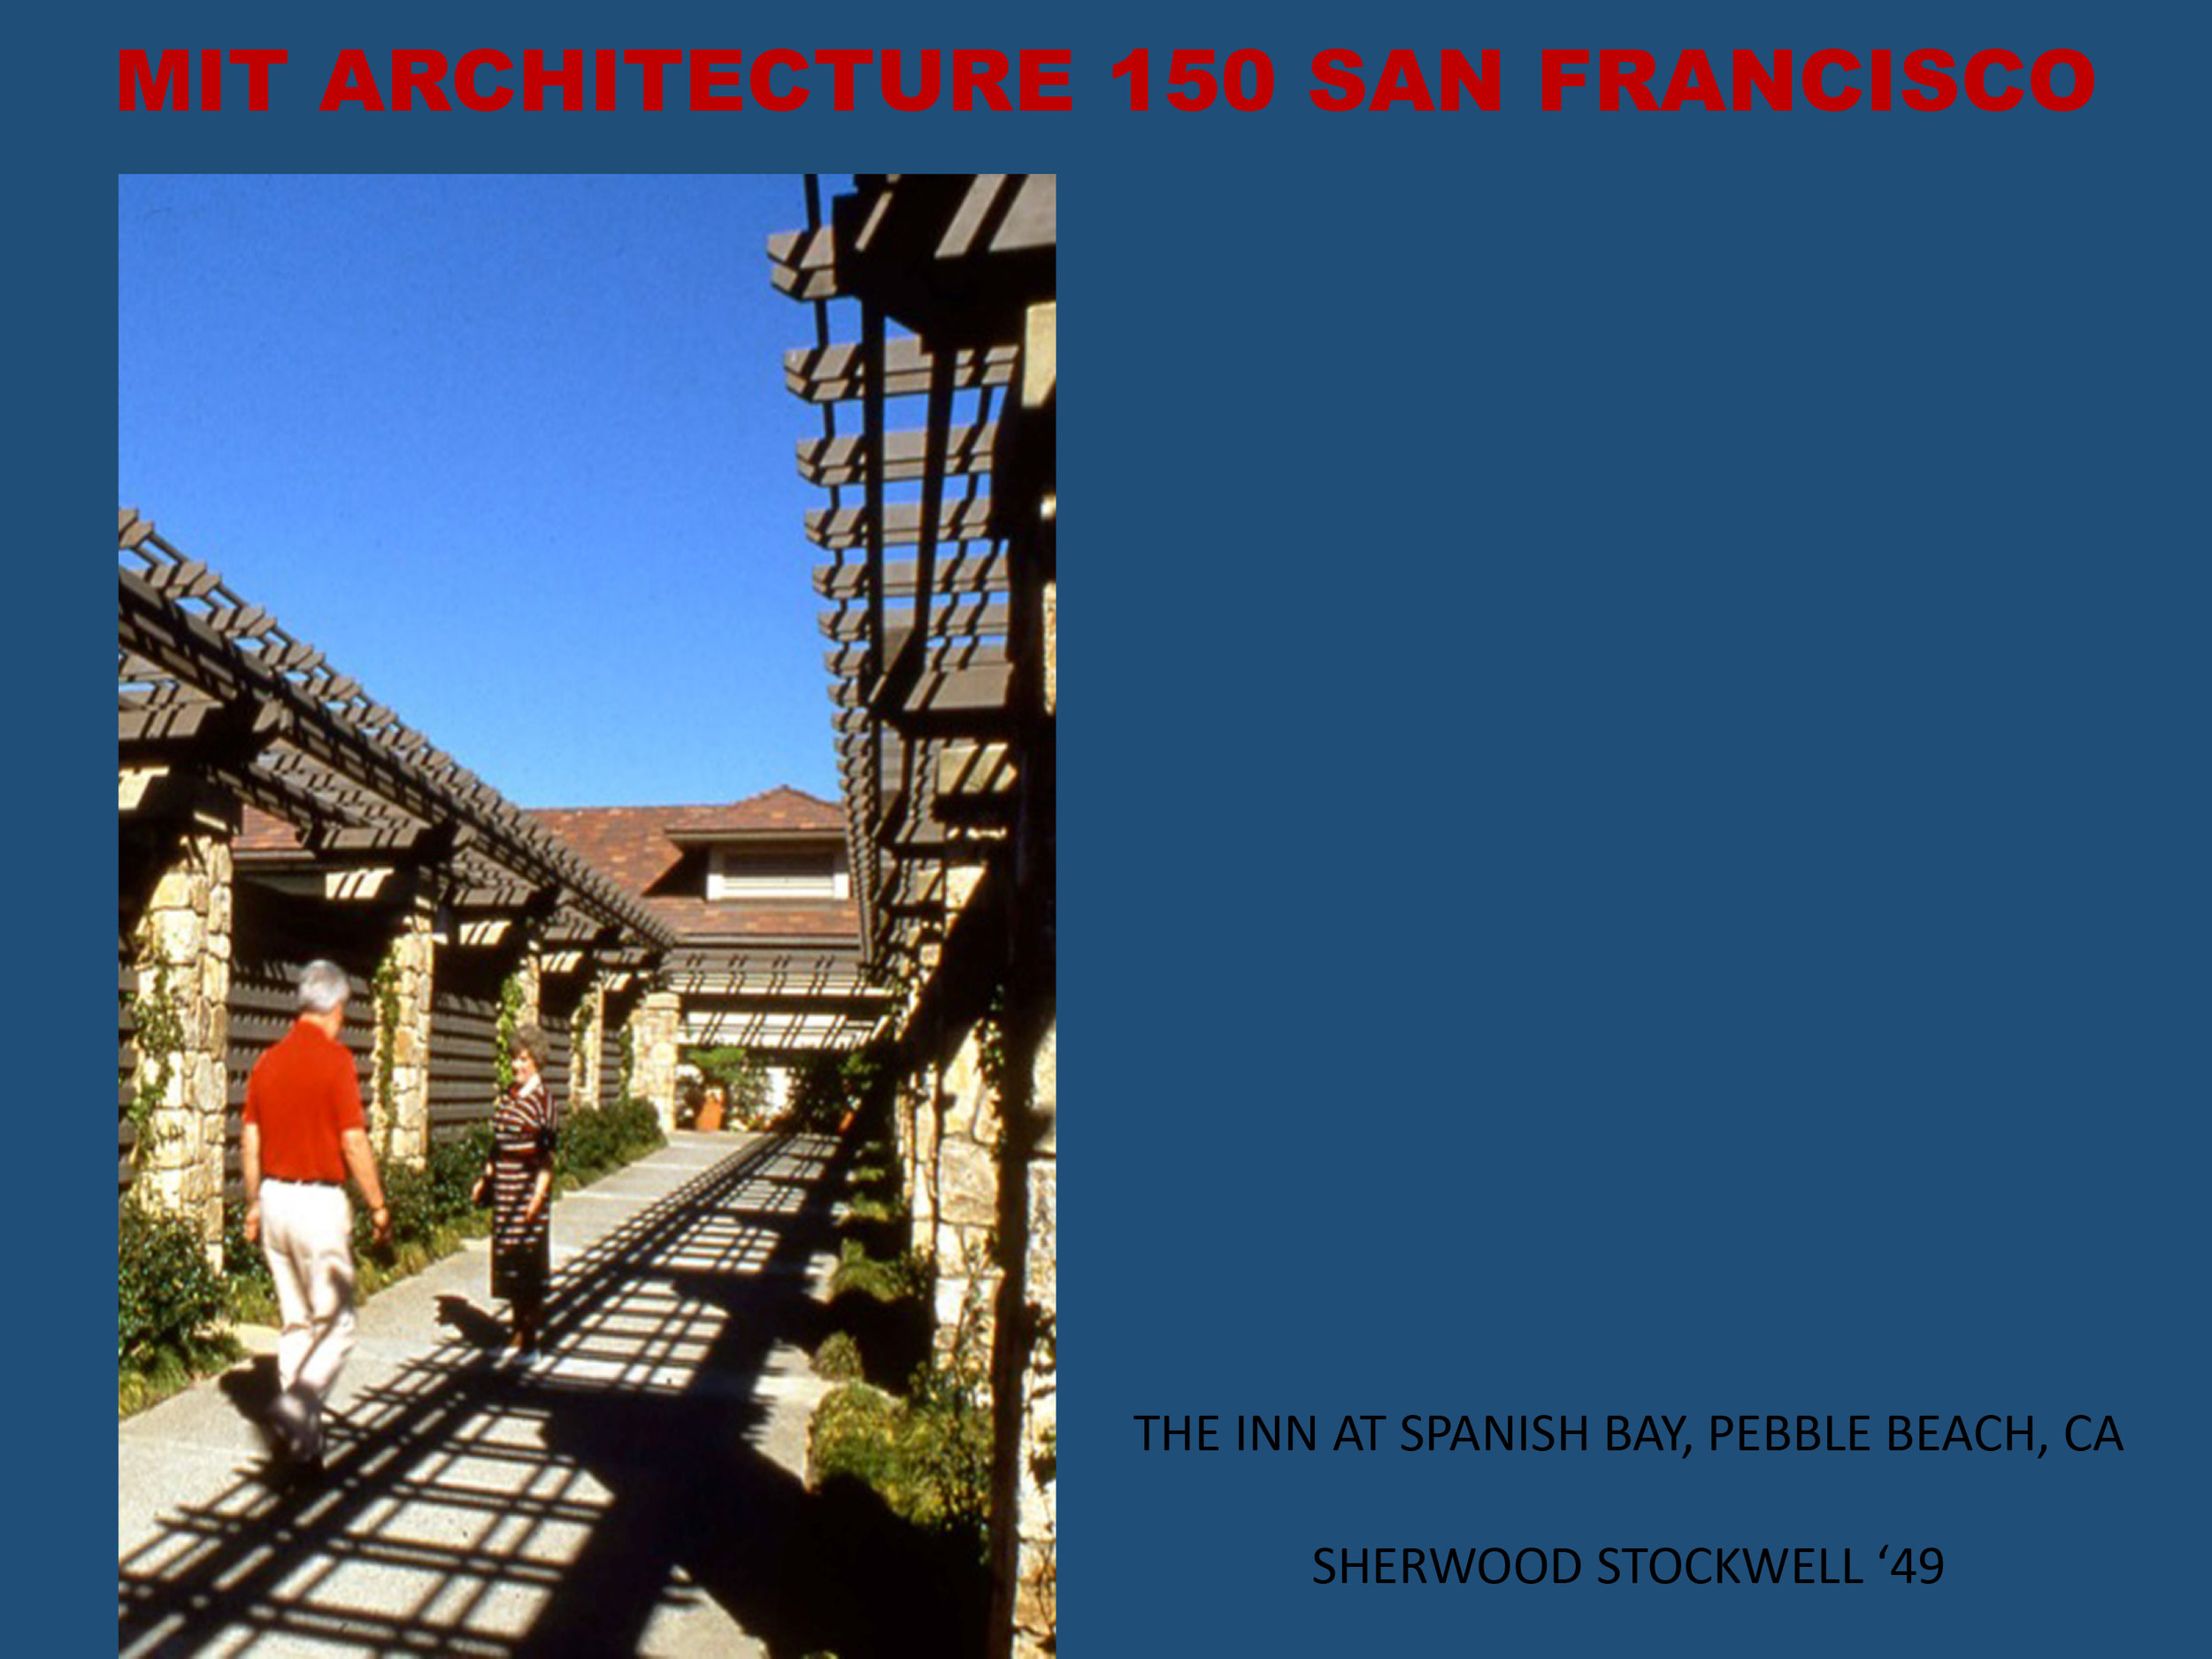 MIT ARCHITECTURE 150 SAN FRANCISCO SLIDESHOW-63 copy.jpg